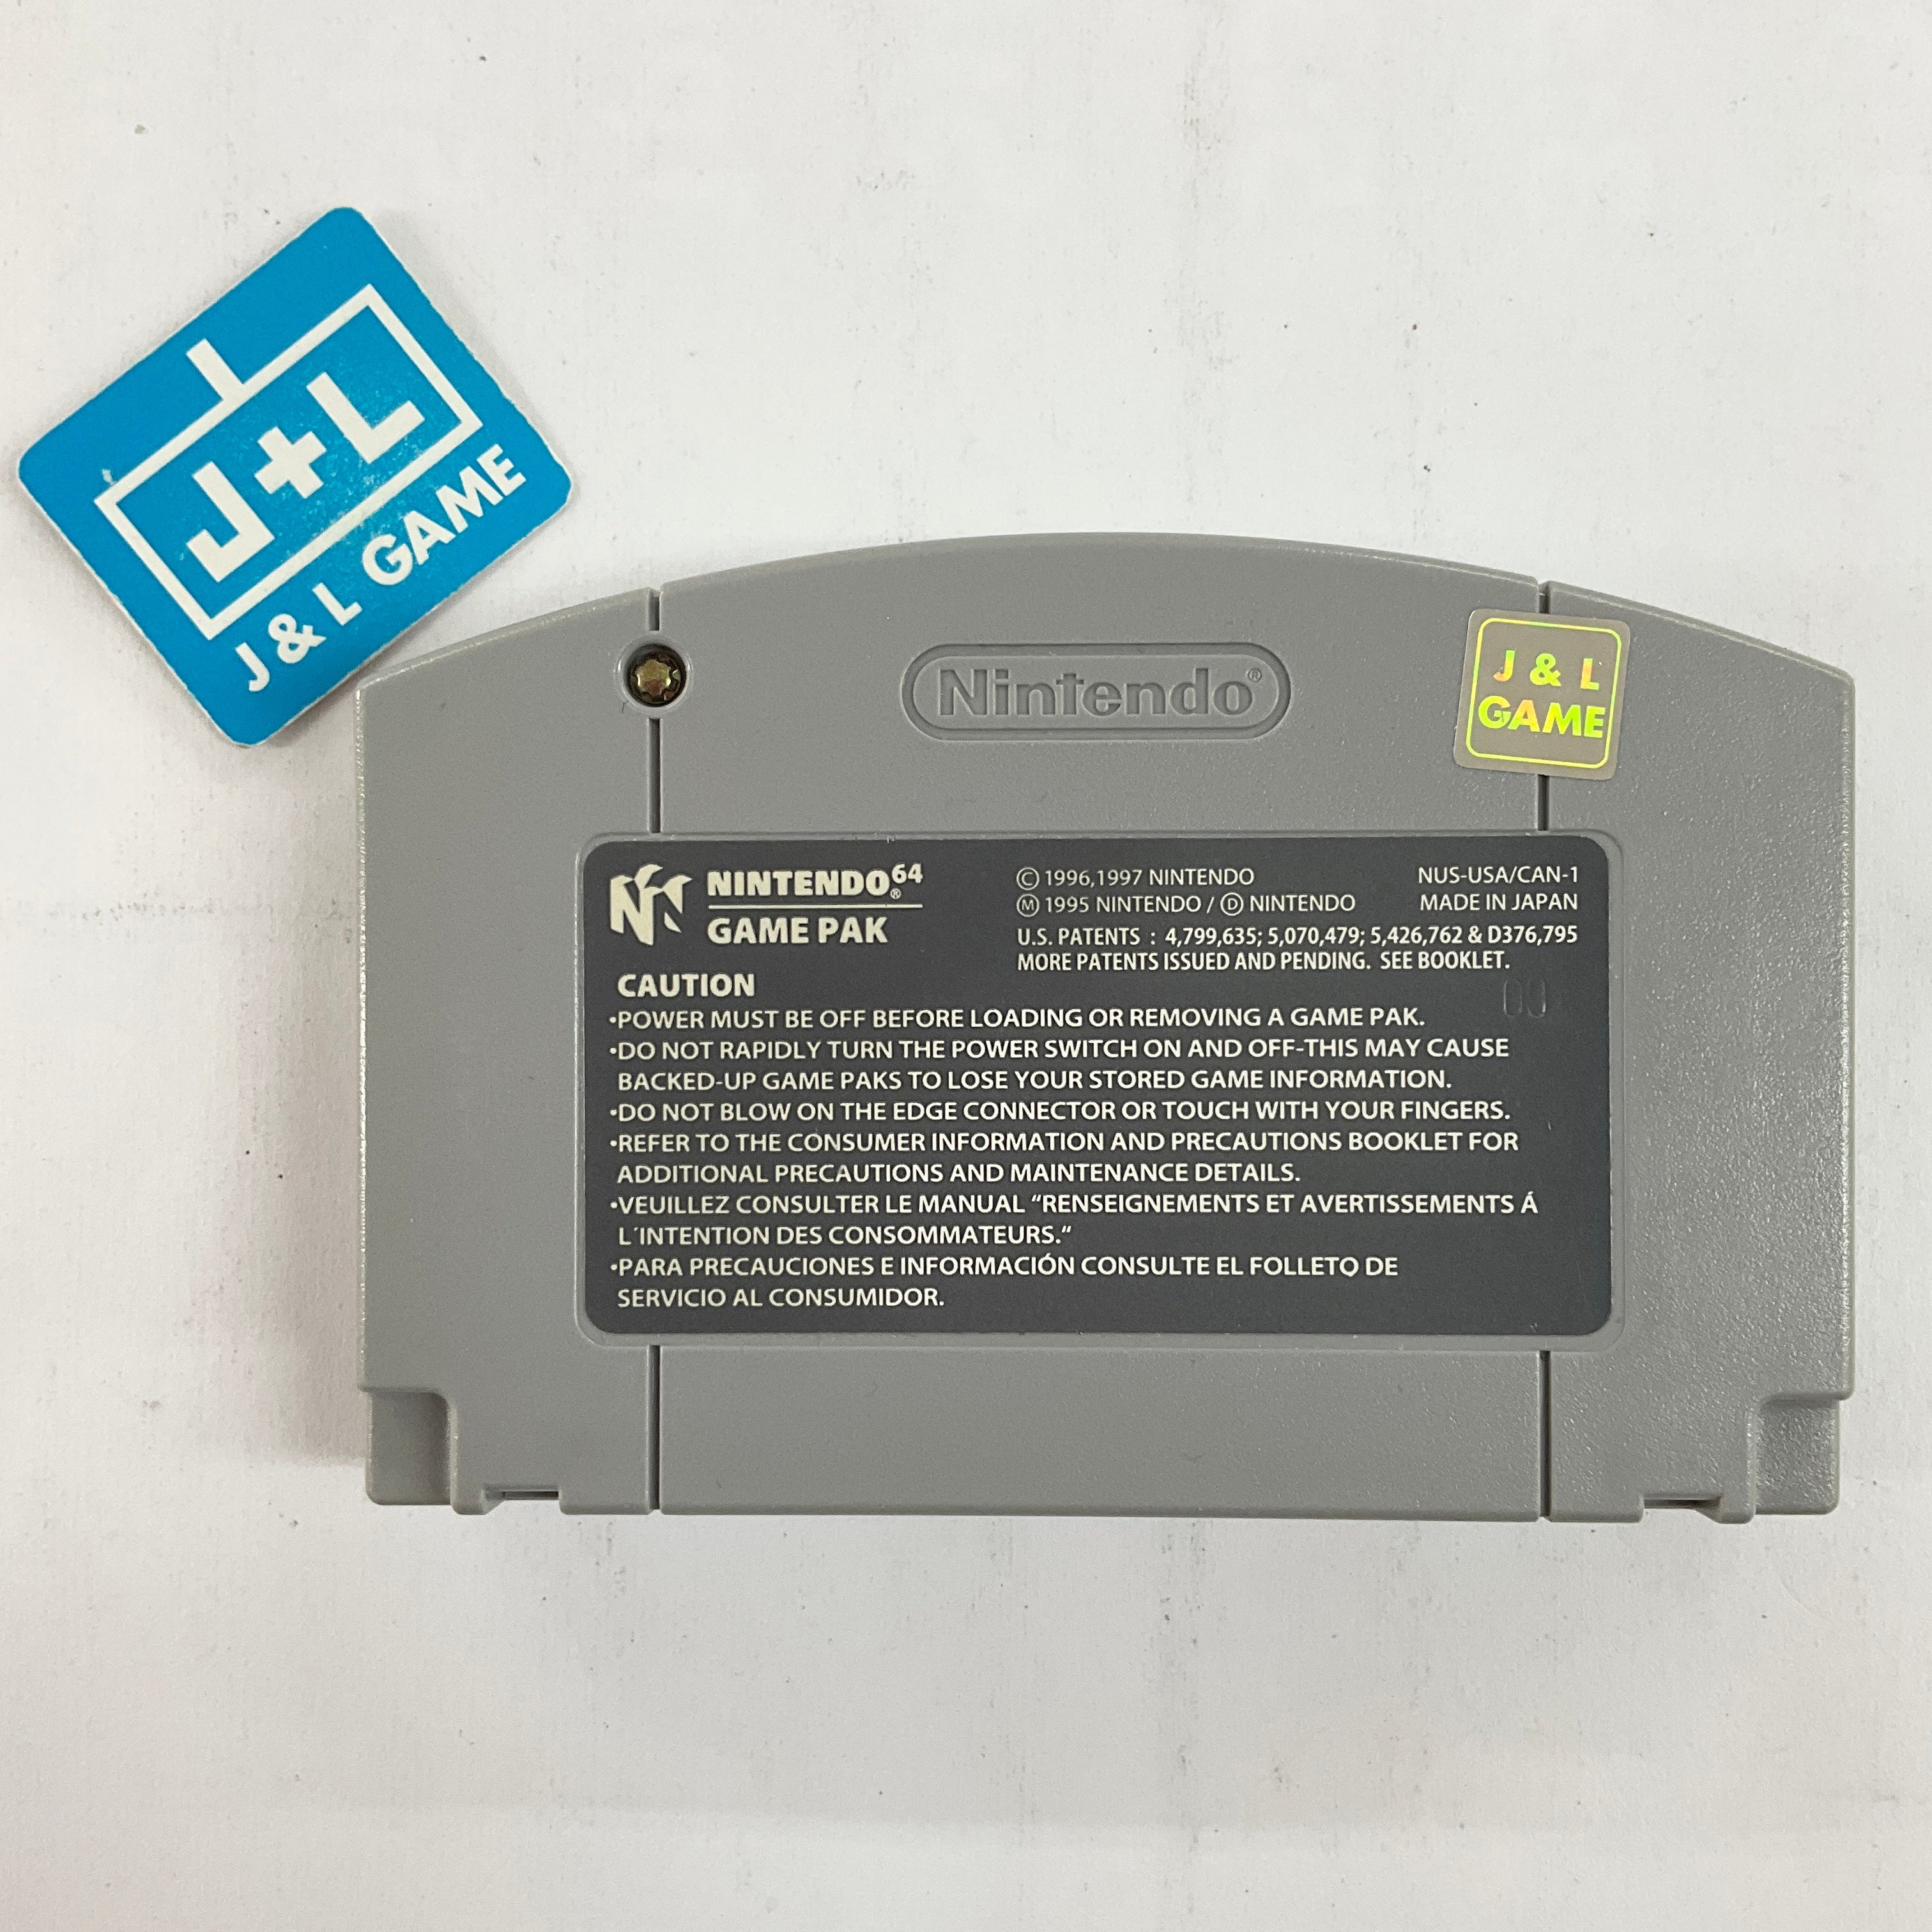 Super Smash Bros. (Player's Choice) - (N64) Nintendo 64 [Pre-Owned] Video Games Nintendo   